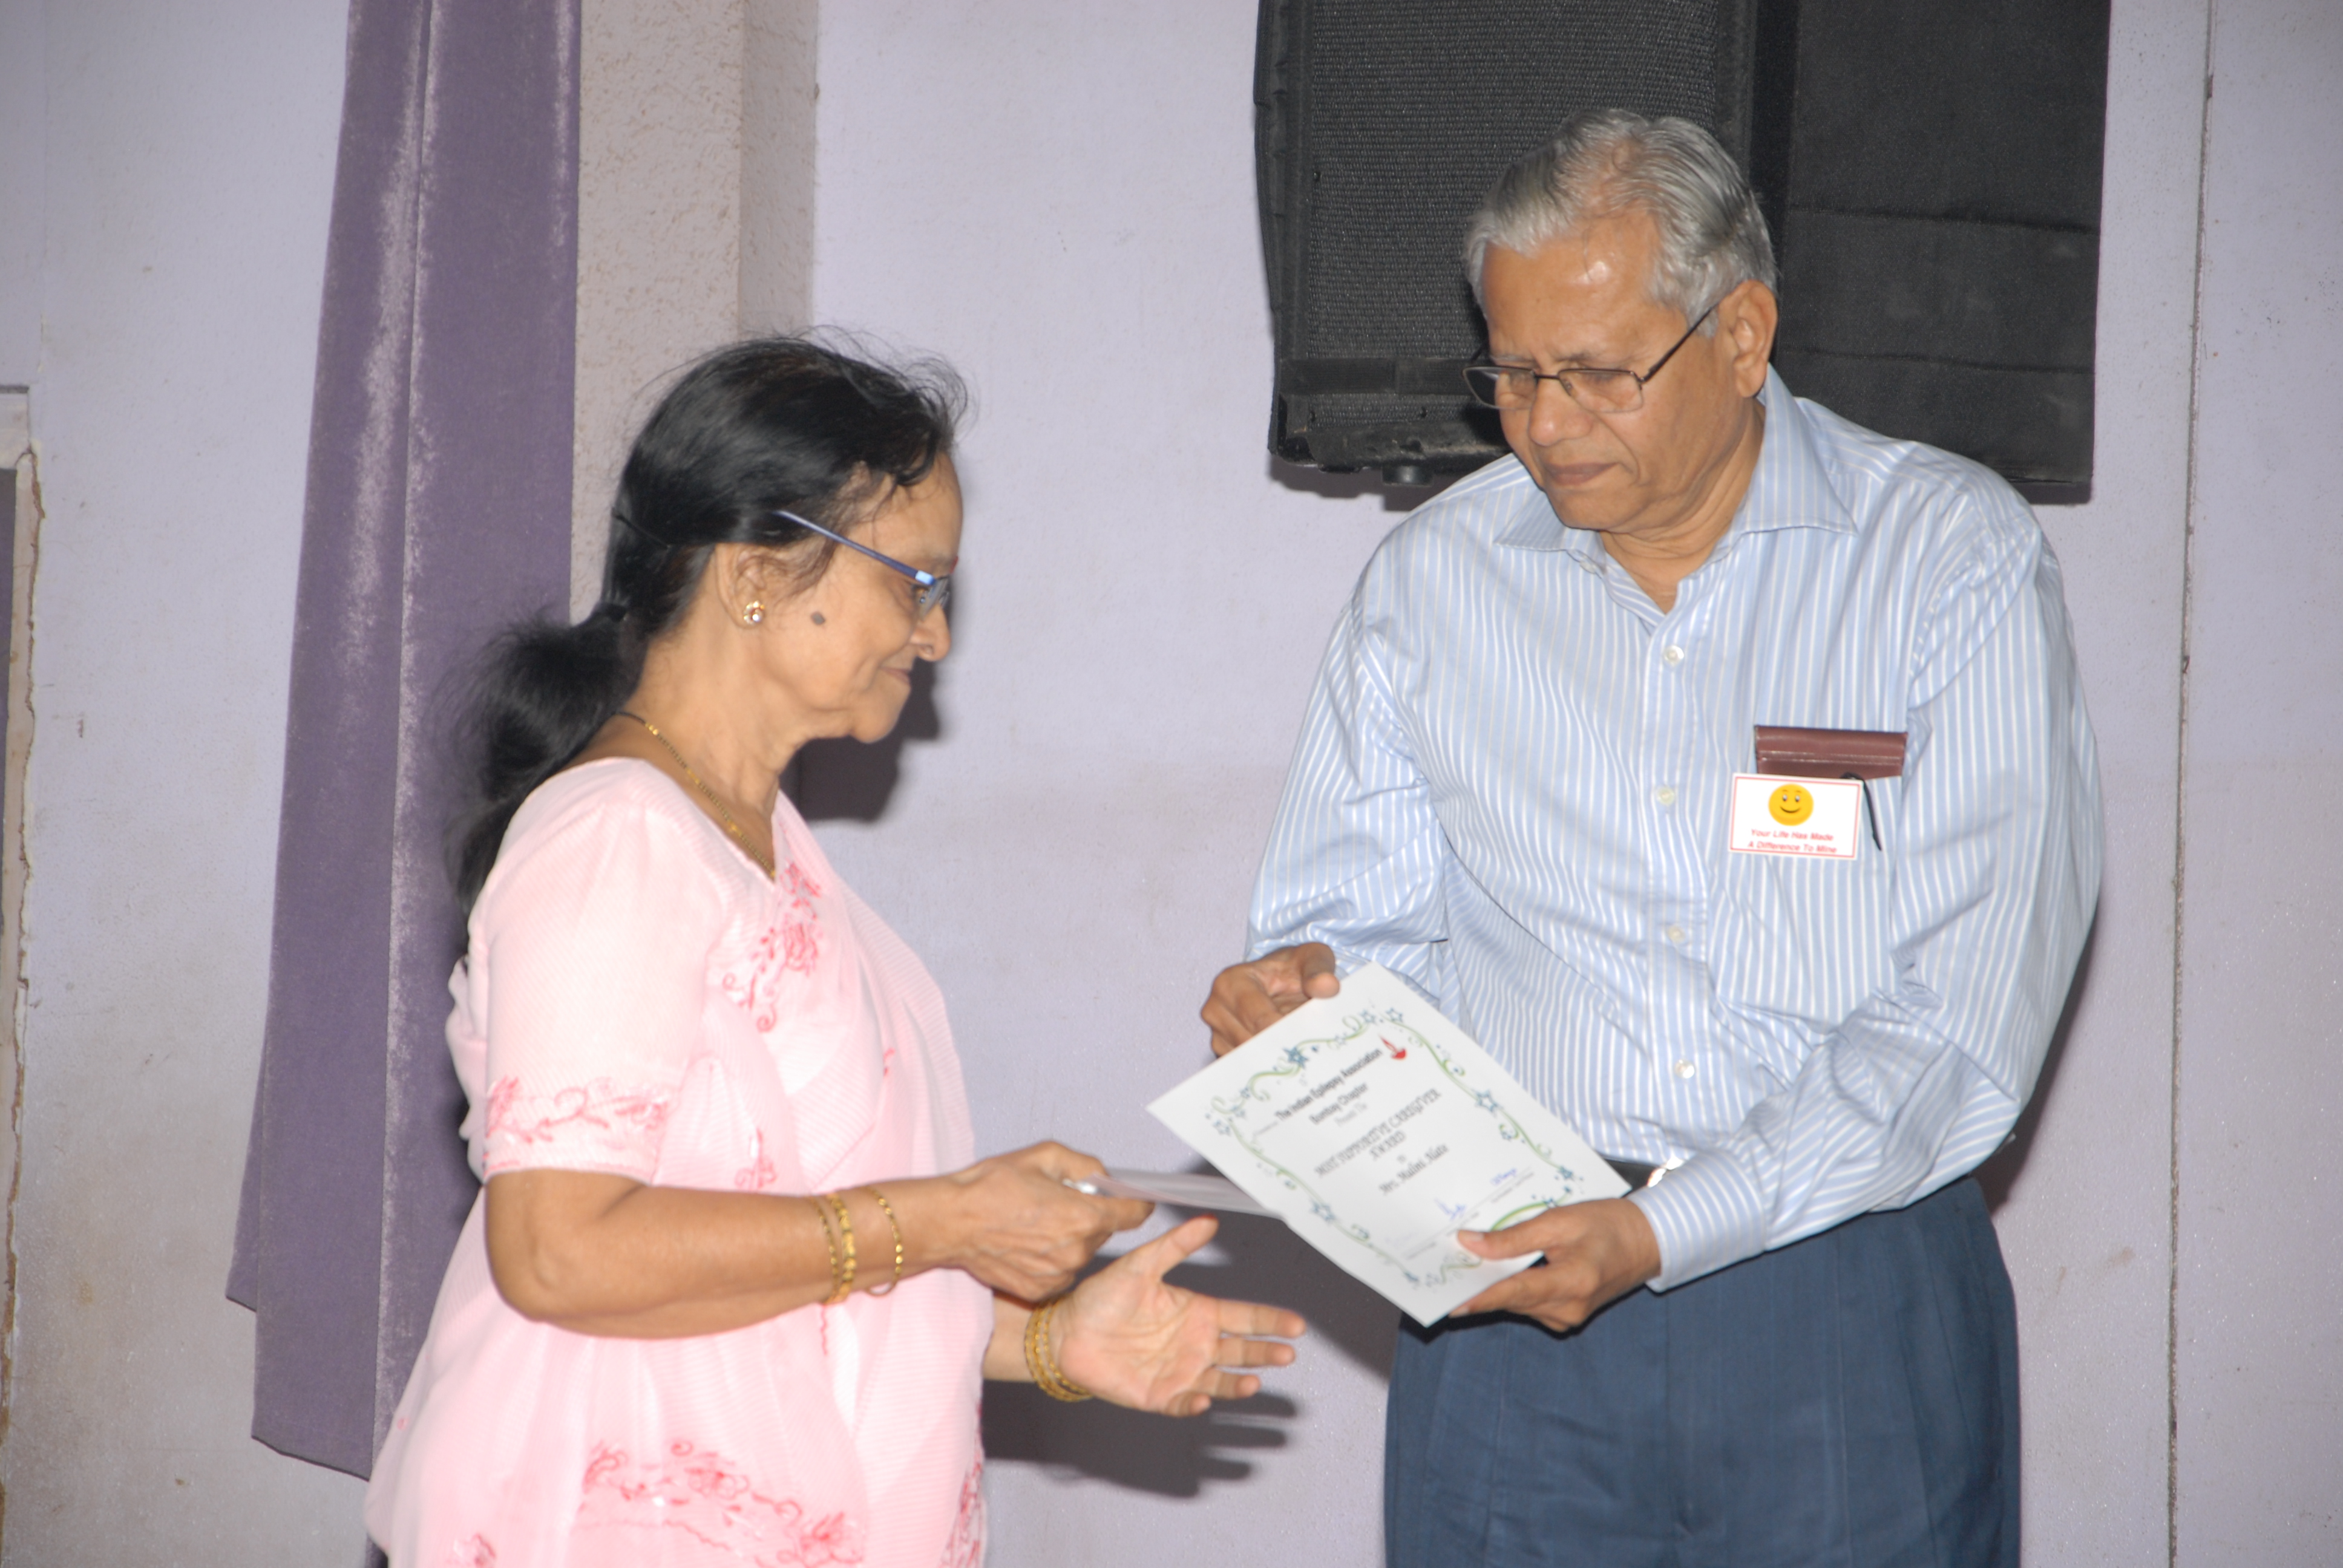 Malini Alate wins the Most Supportive Caregiver Award  